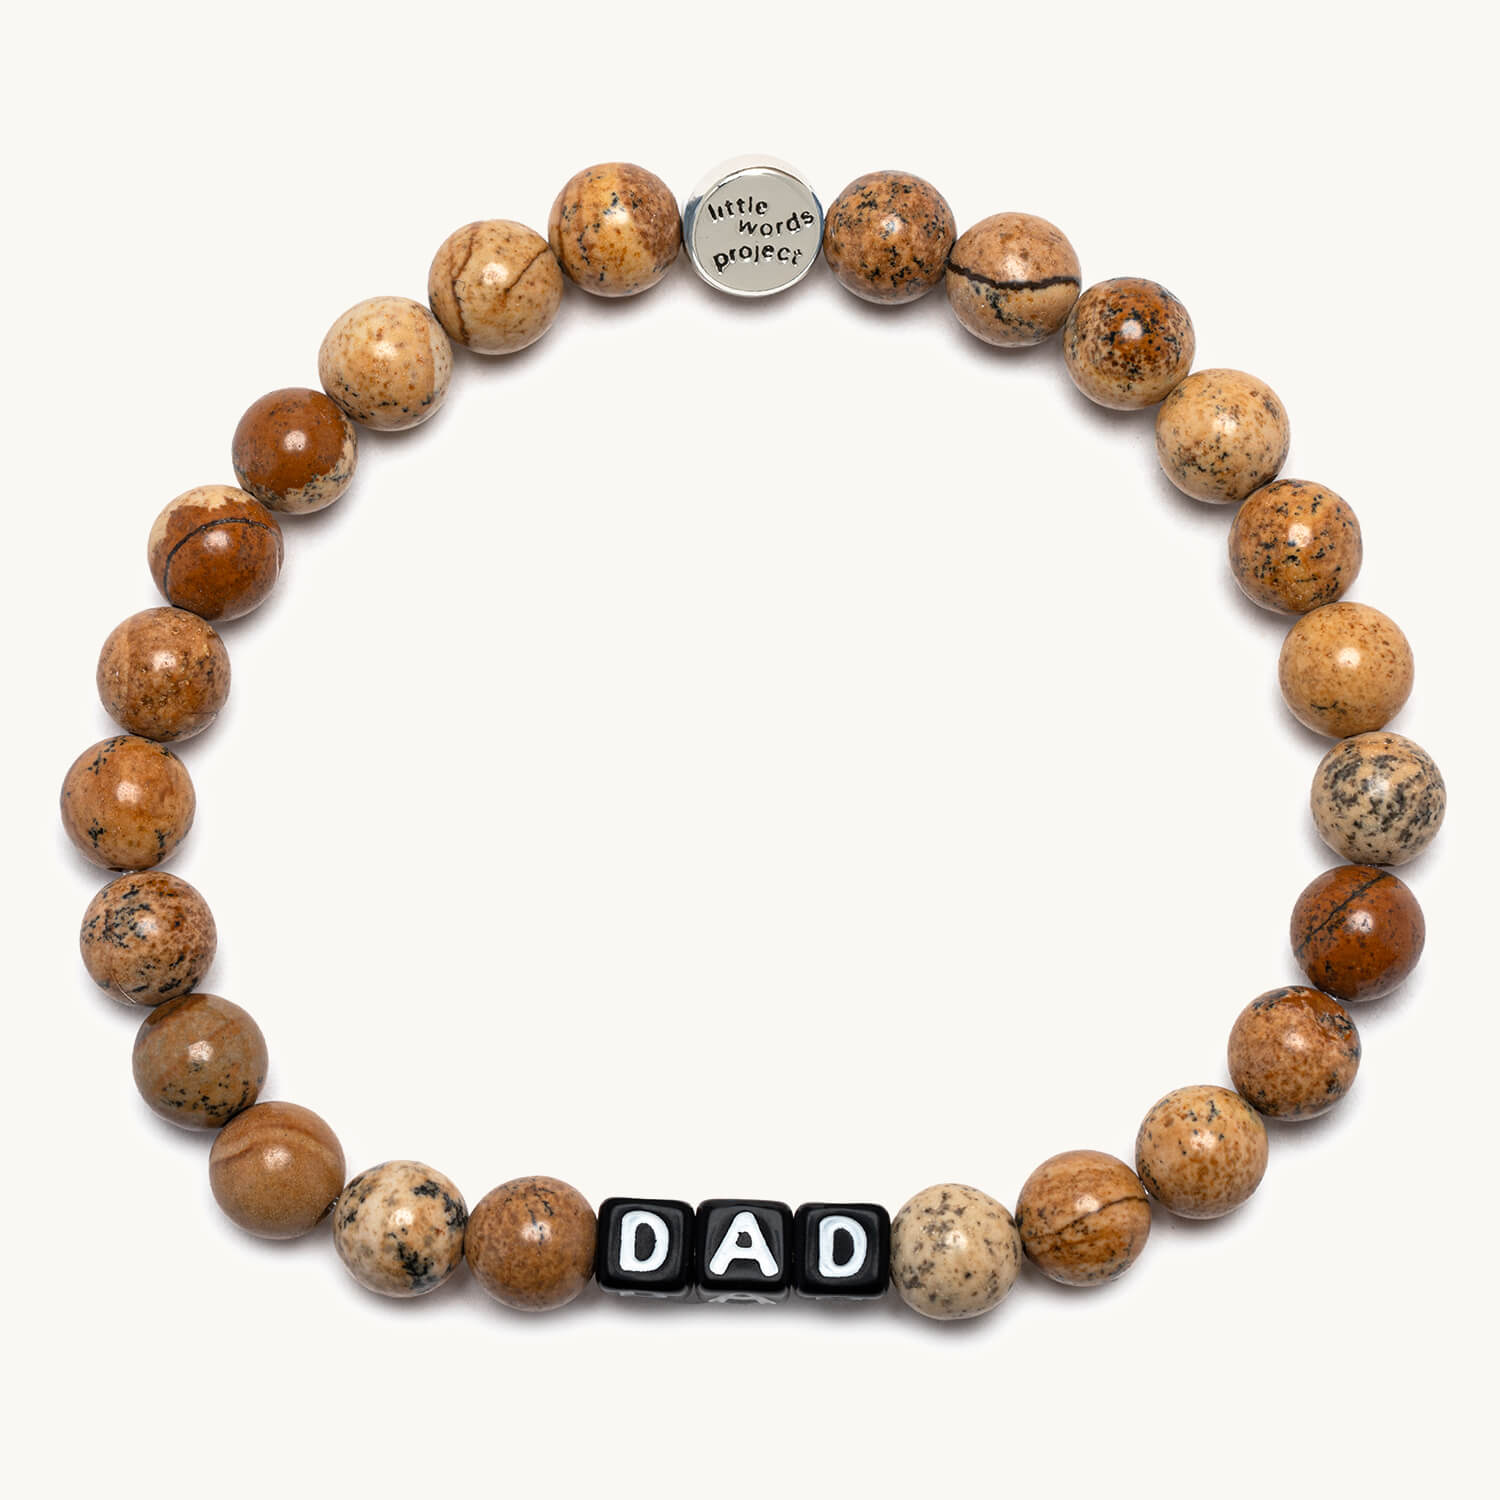 Dad- Little Words Project Bracelet 